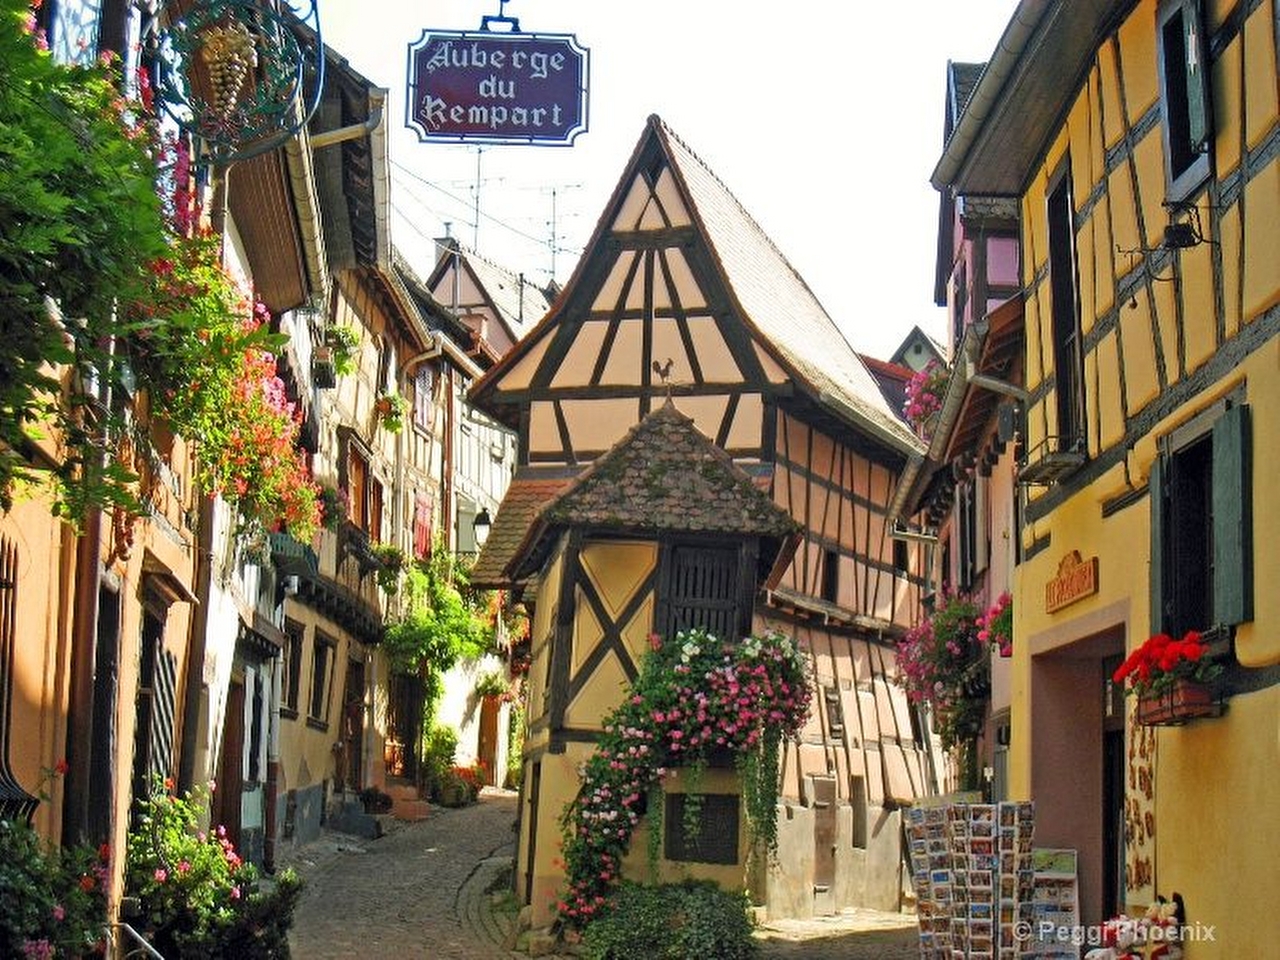 Alsace-Lorraine Resim